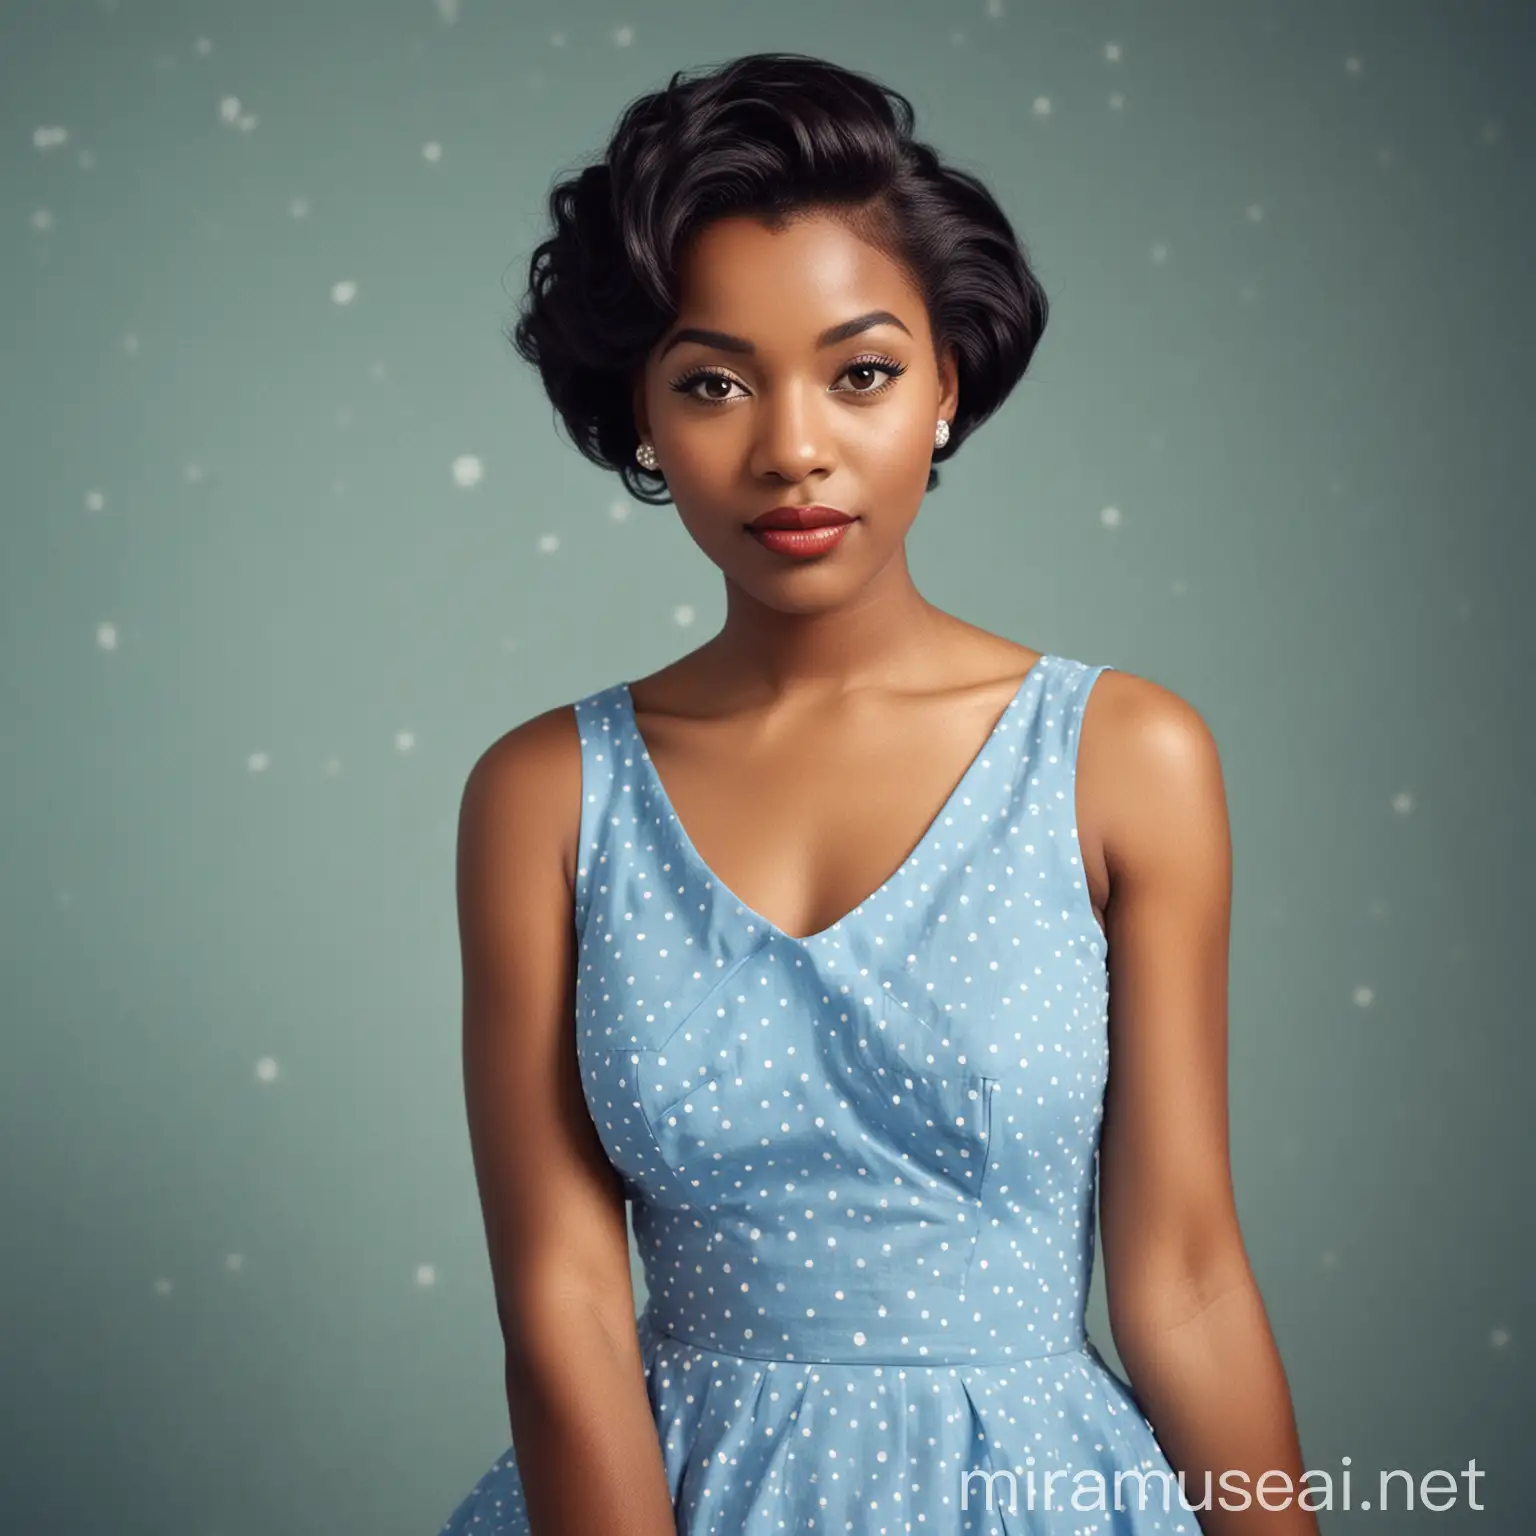 black woman, pretty girl, short hair, blue dress, white dotted dress, 1950s aesthetic